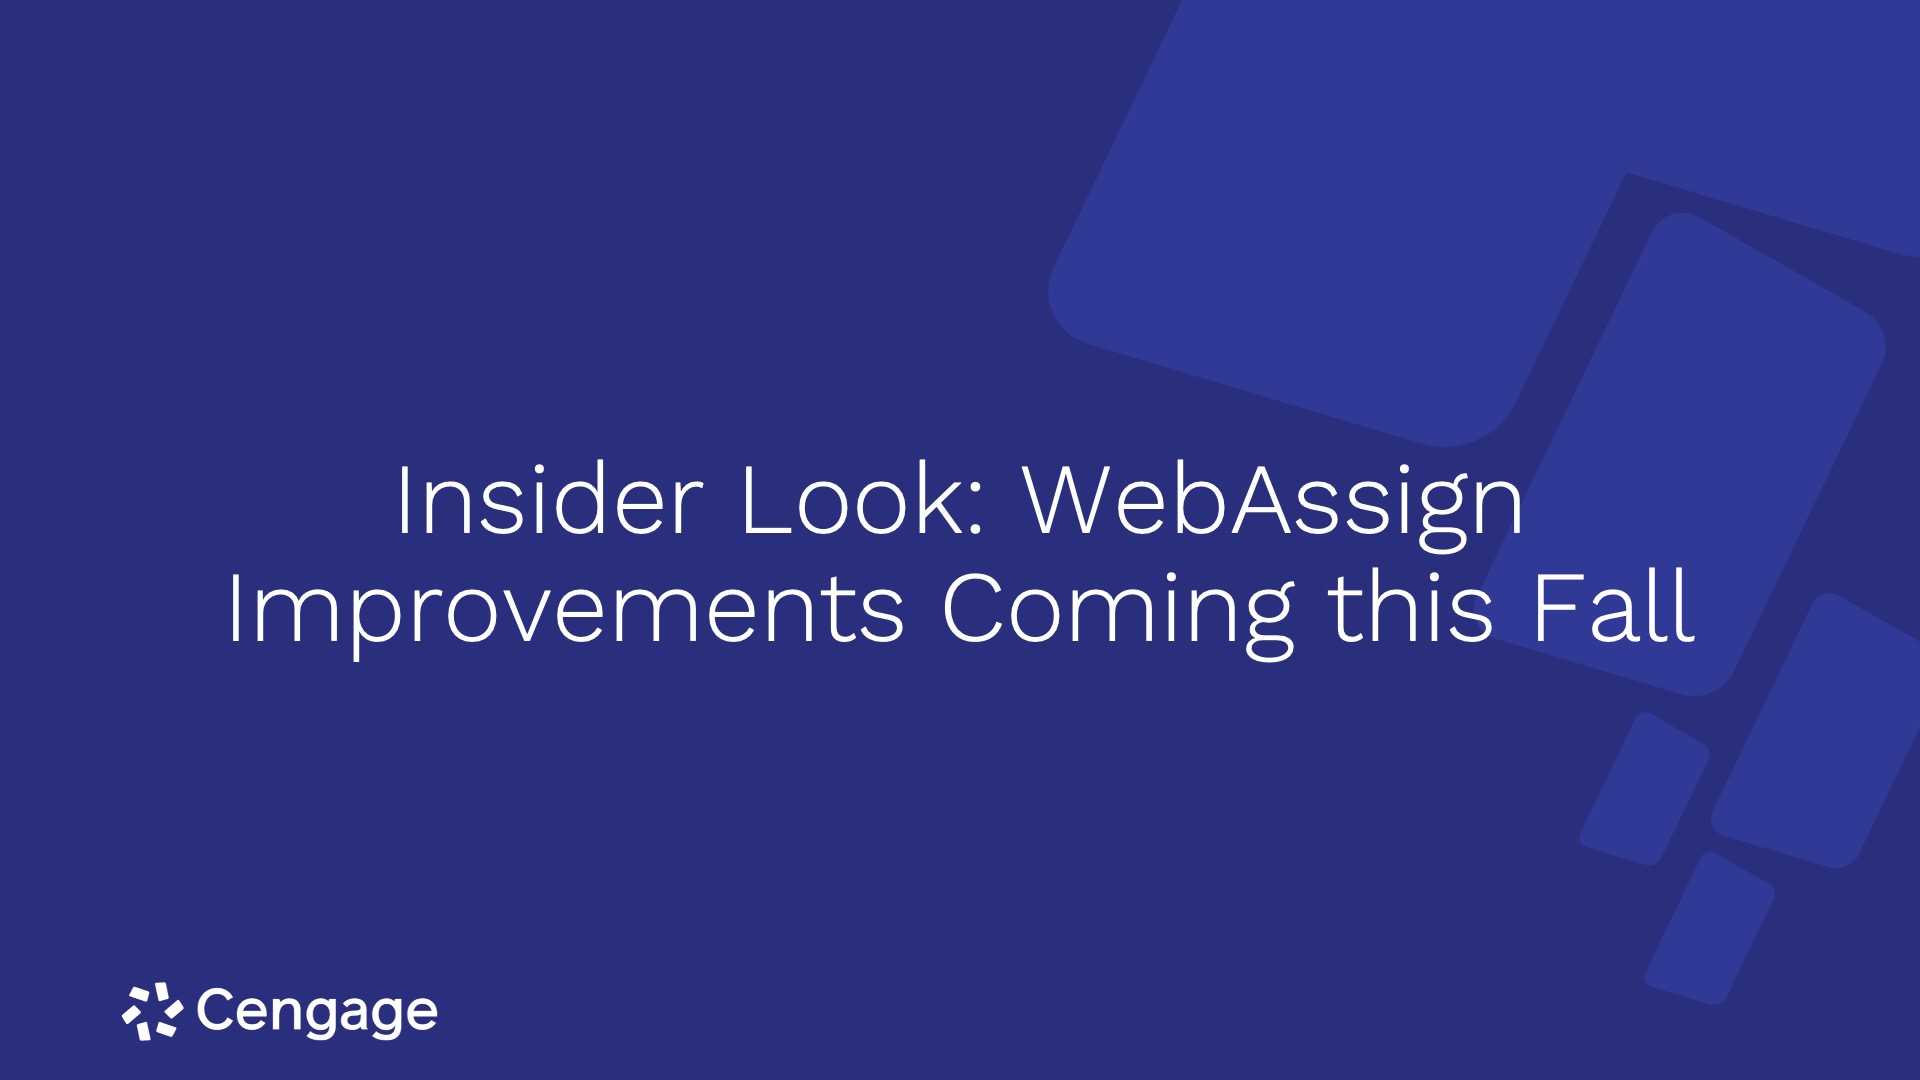 Insider Look: Upcoming WebAssign Improvements